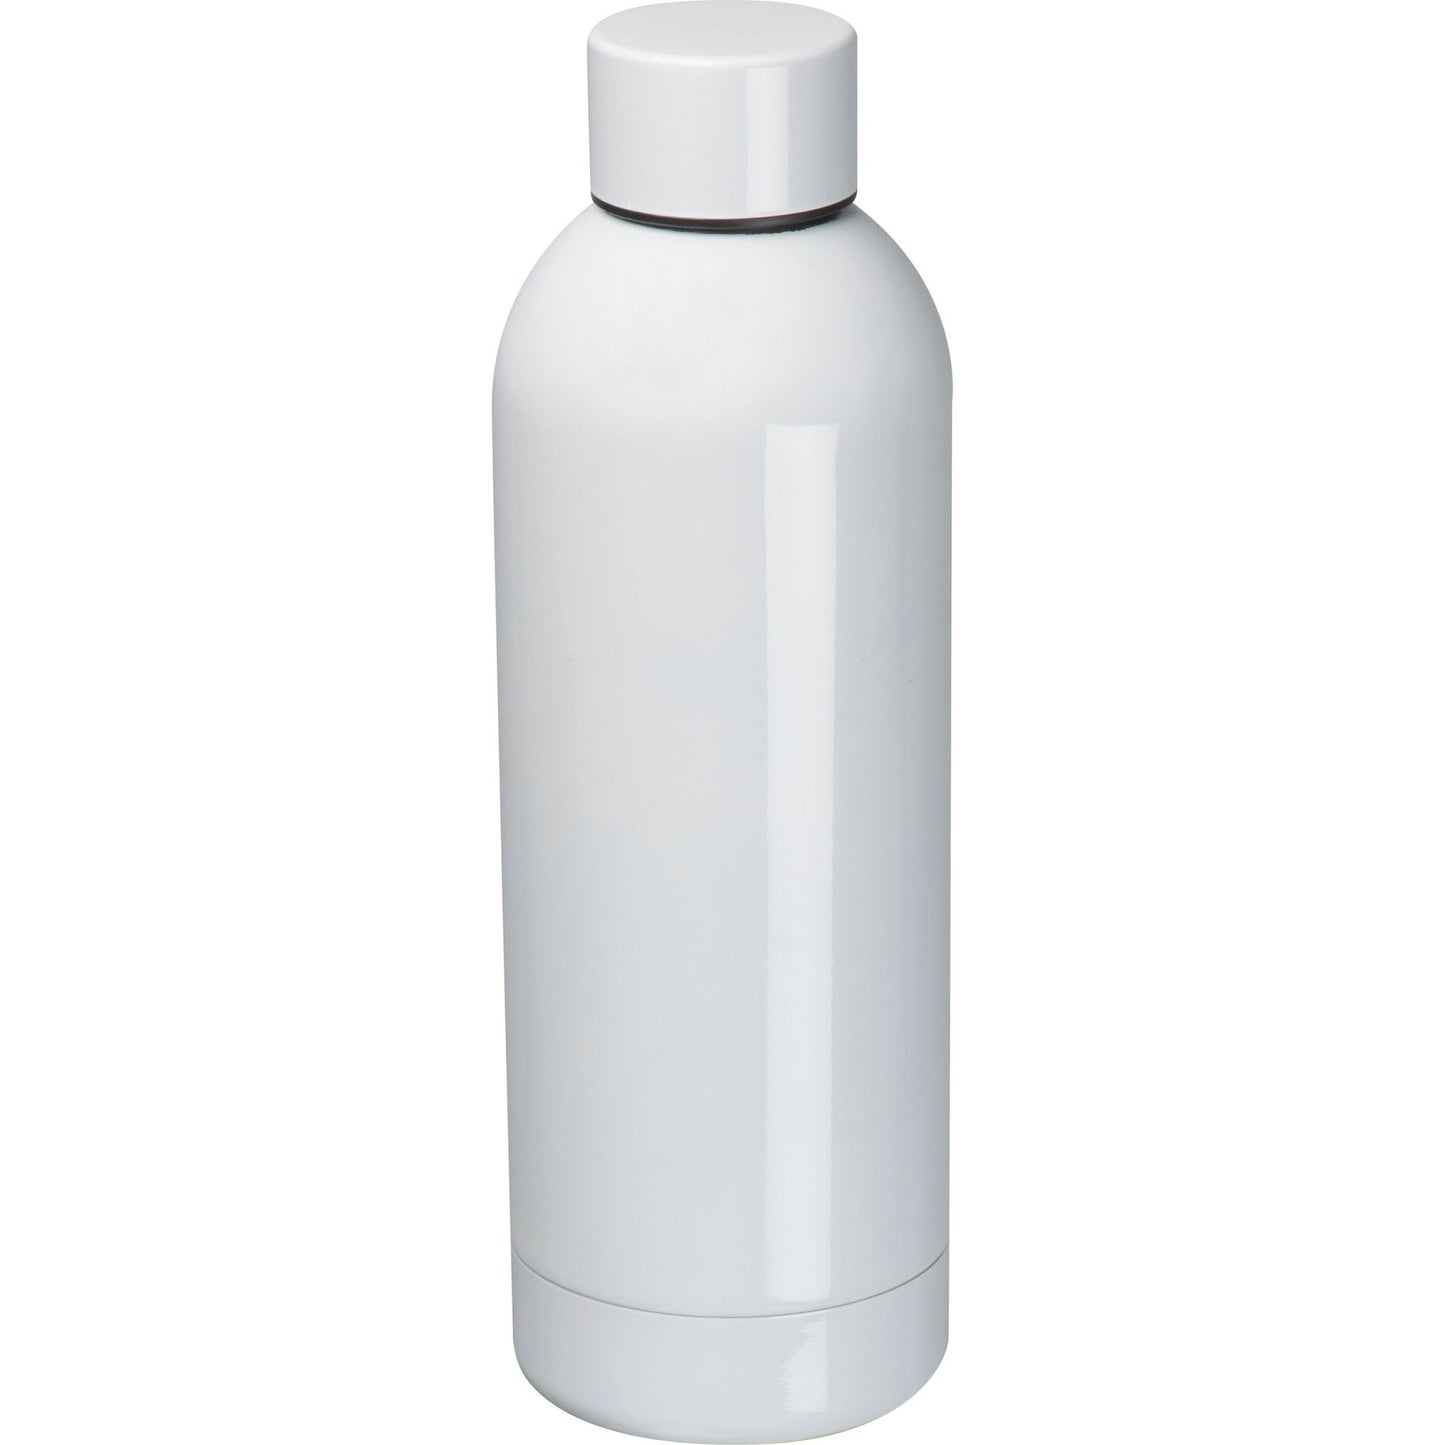 Stainless steel drinking bottle in white 500ml